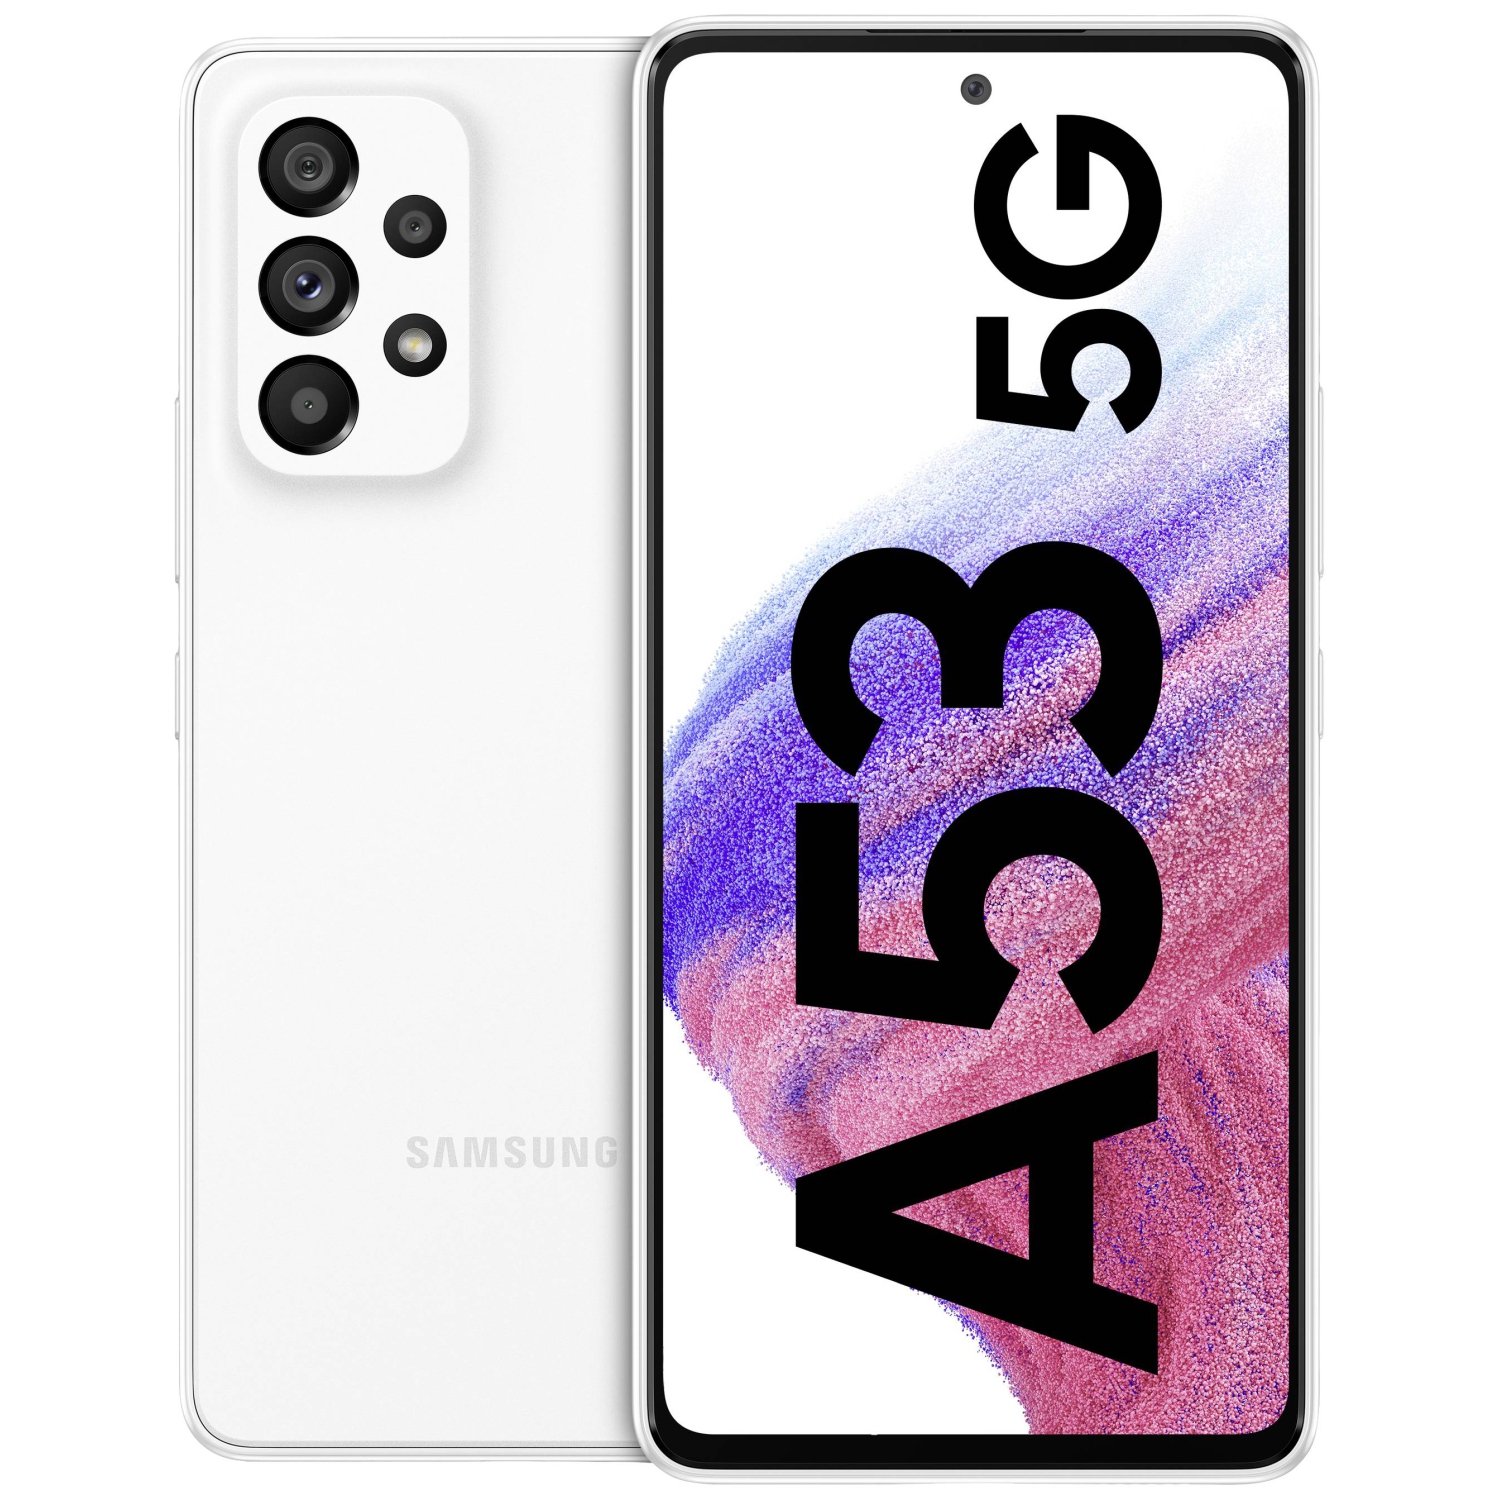 Samsung Galaxy A53 5G (SM-A536E/DS) - Dual SIM,128 GB 6GB RAM - Factory Unlocked GSM, International Version - (Awesome White)